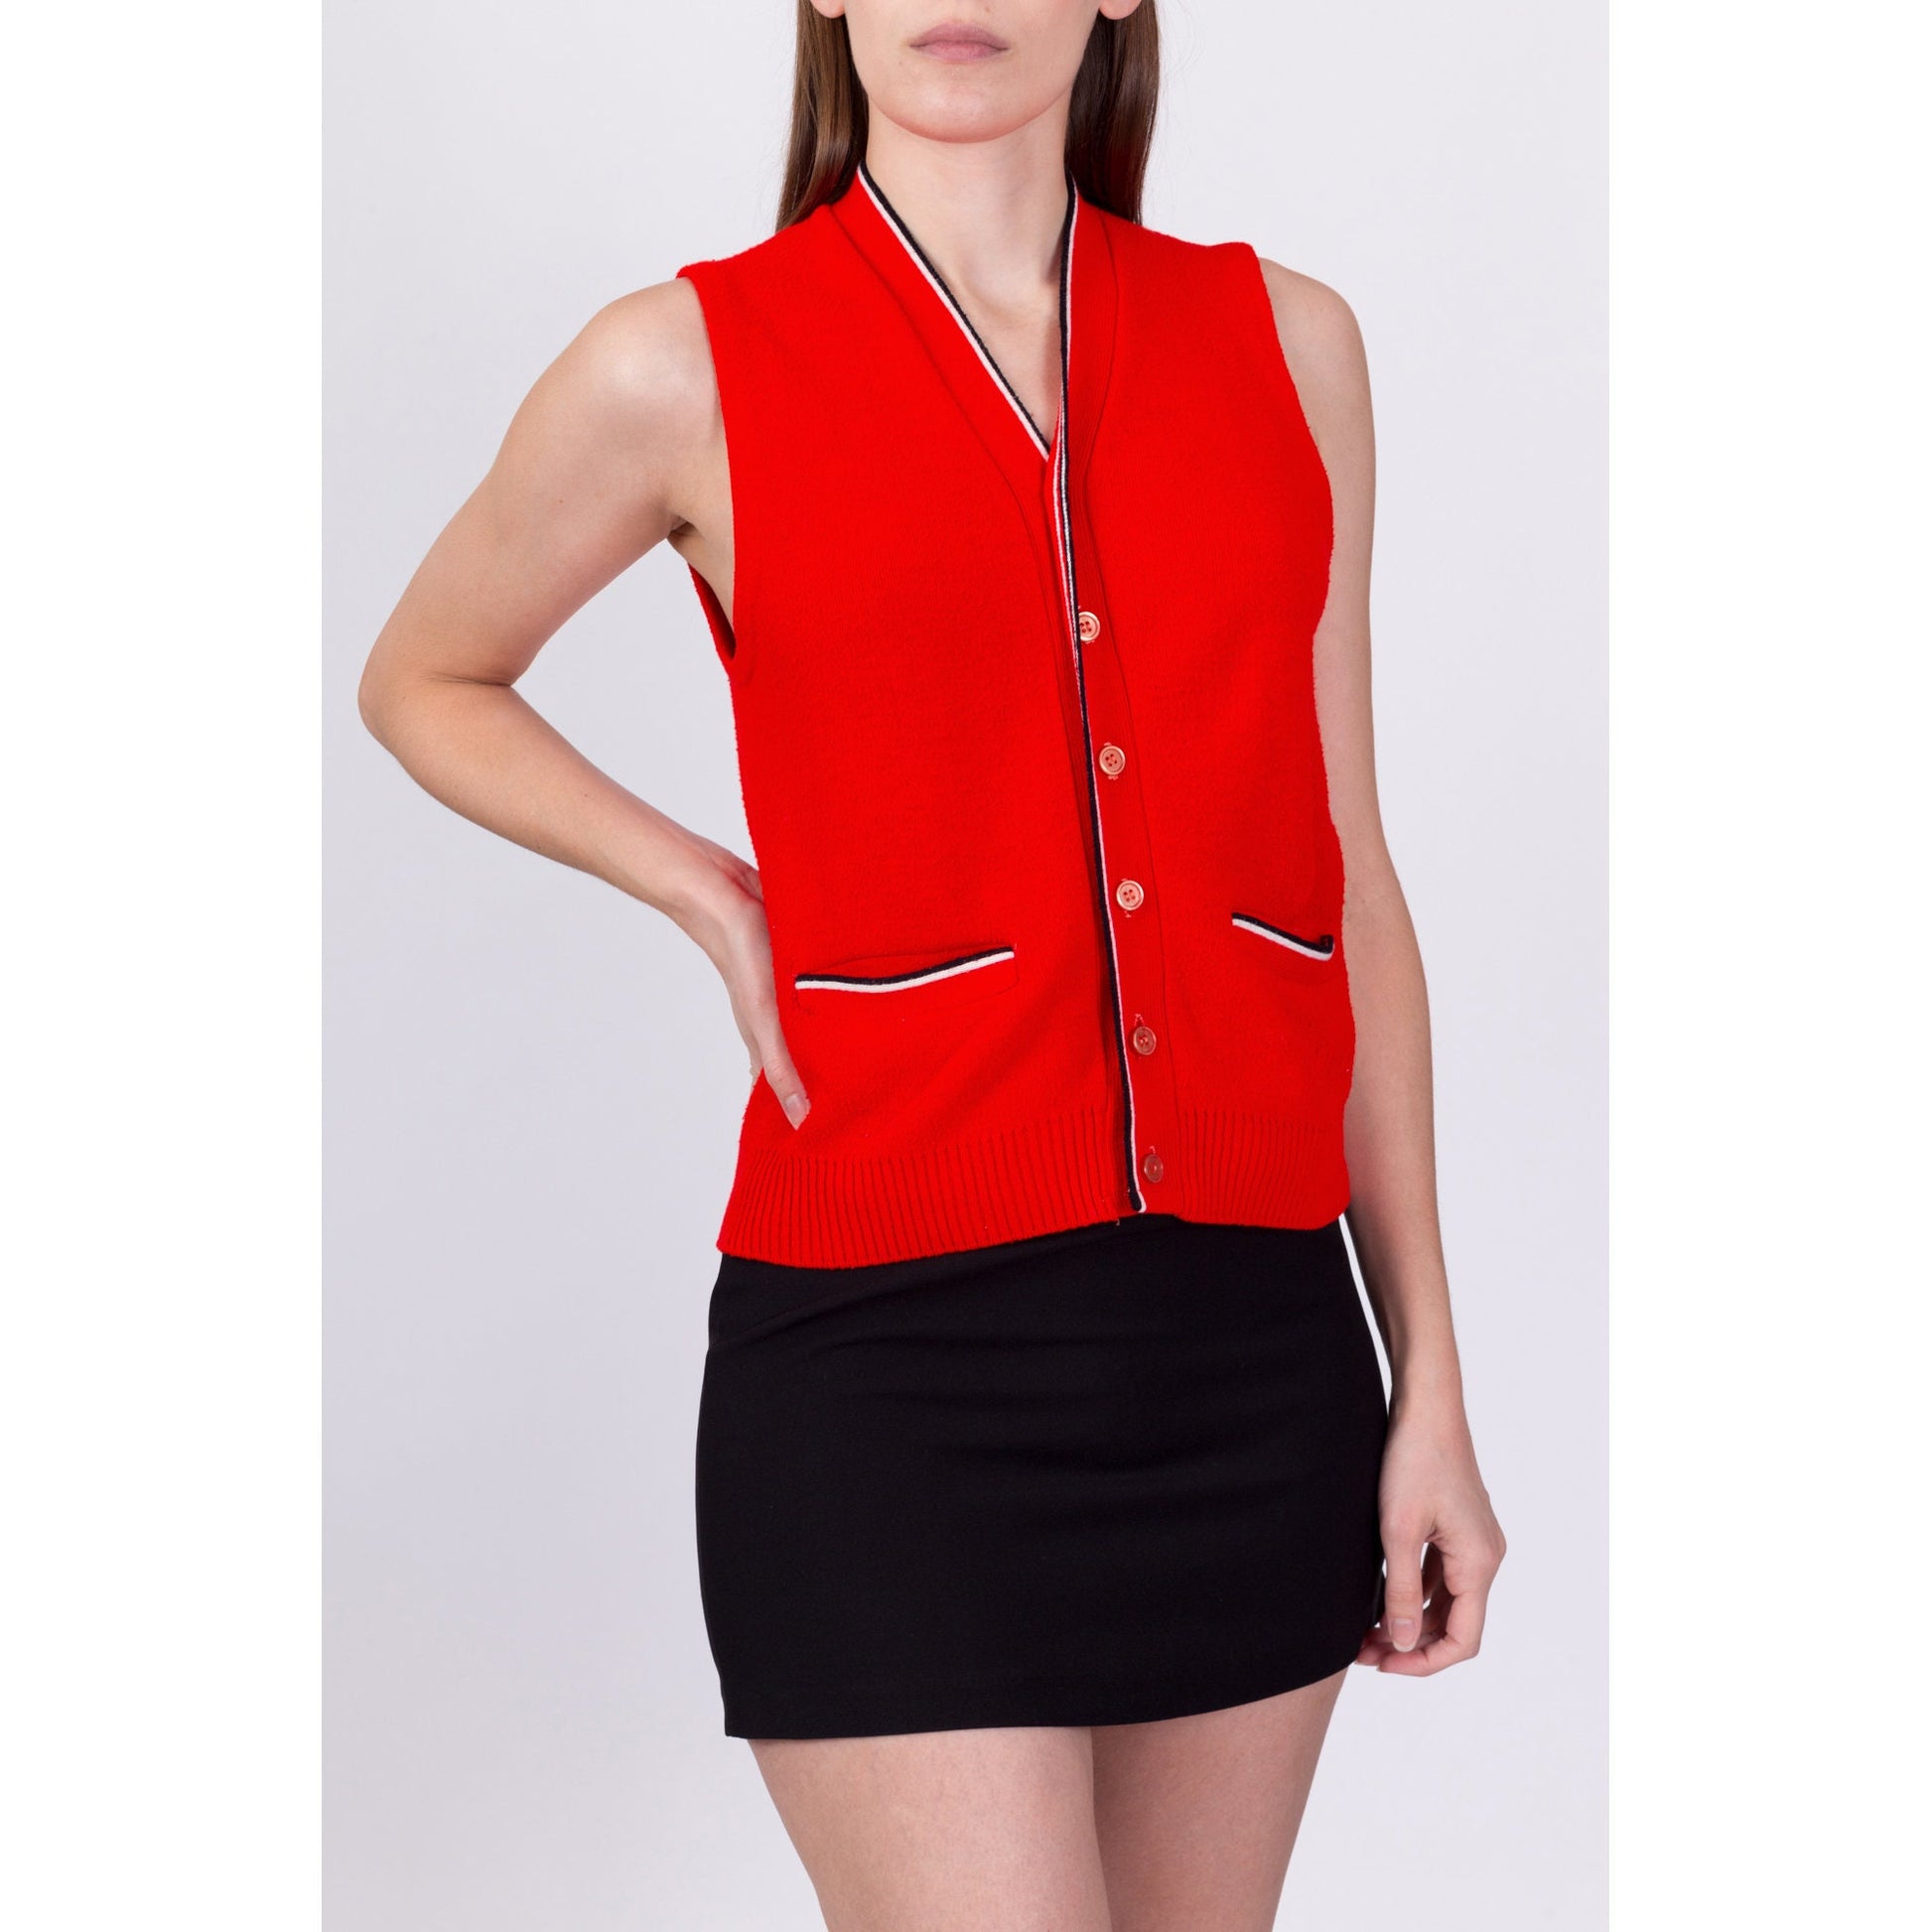 70s Red Knit Sleeveless Sweater Top - Medium 